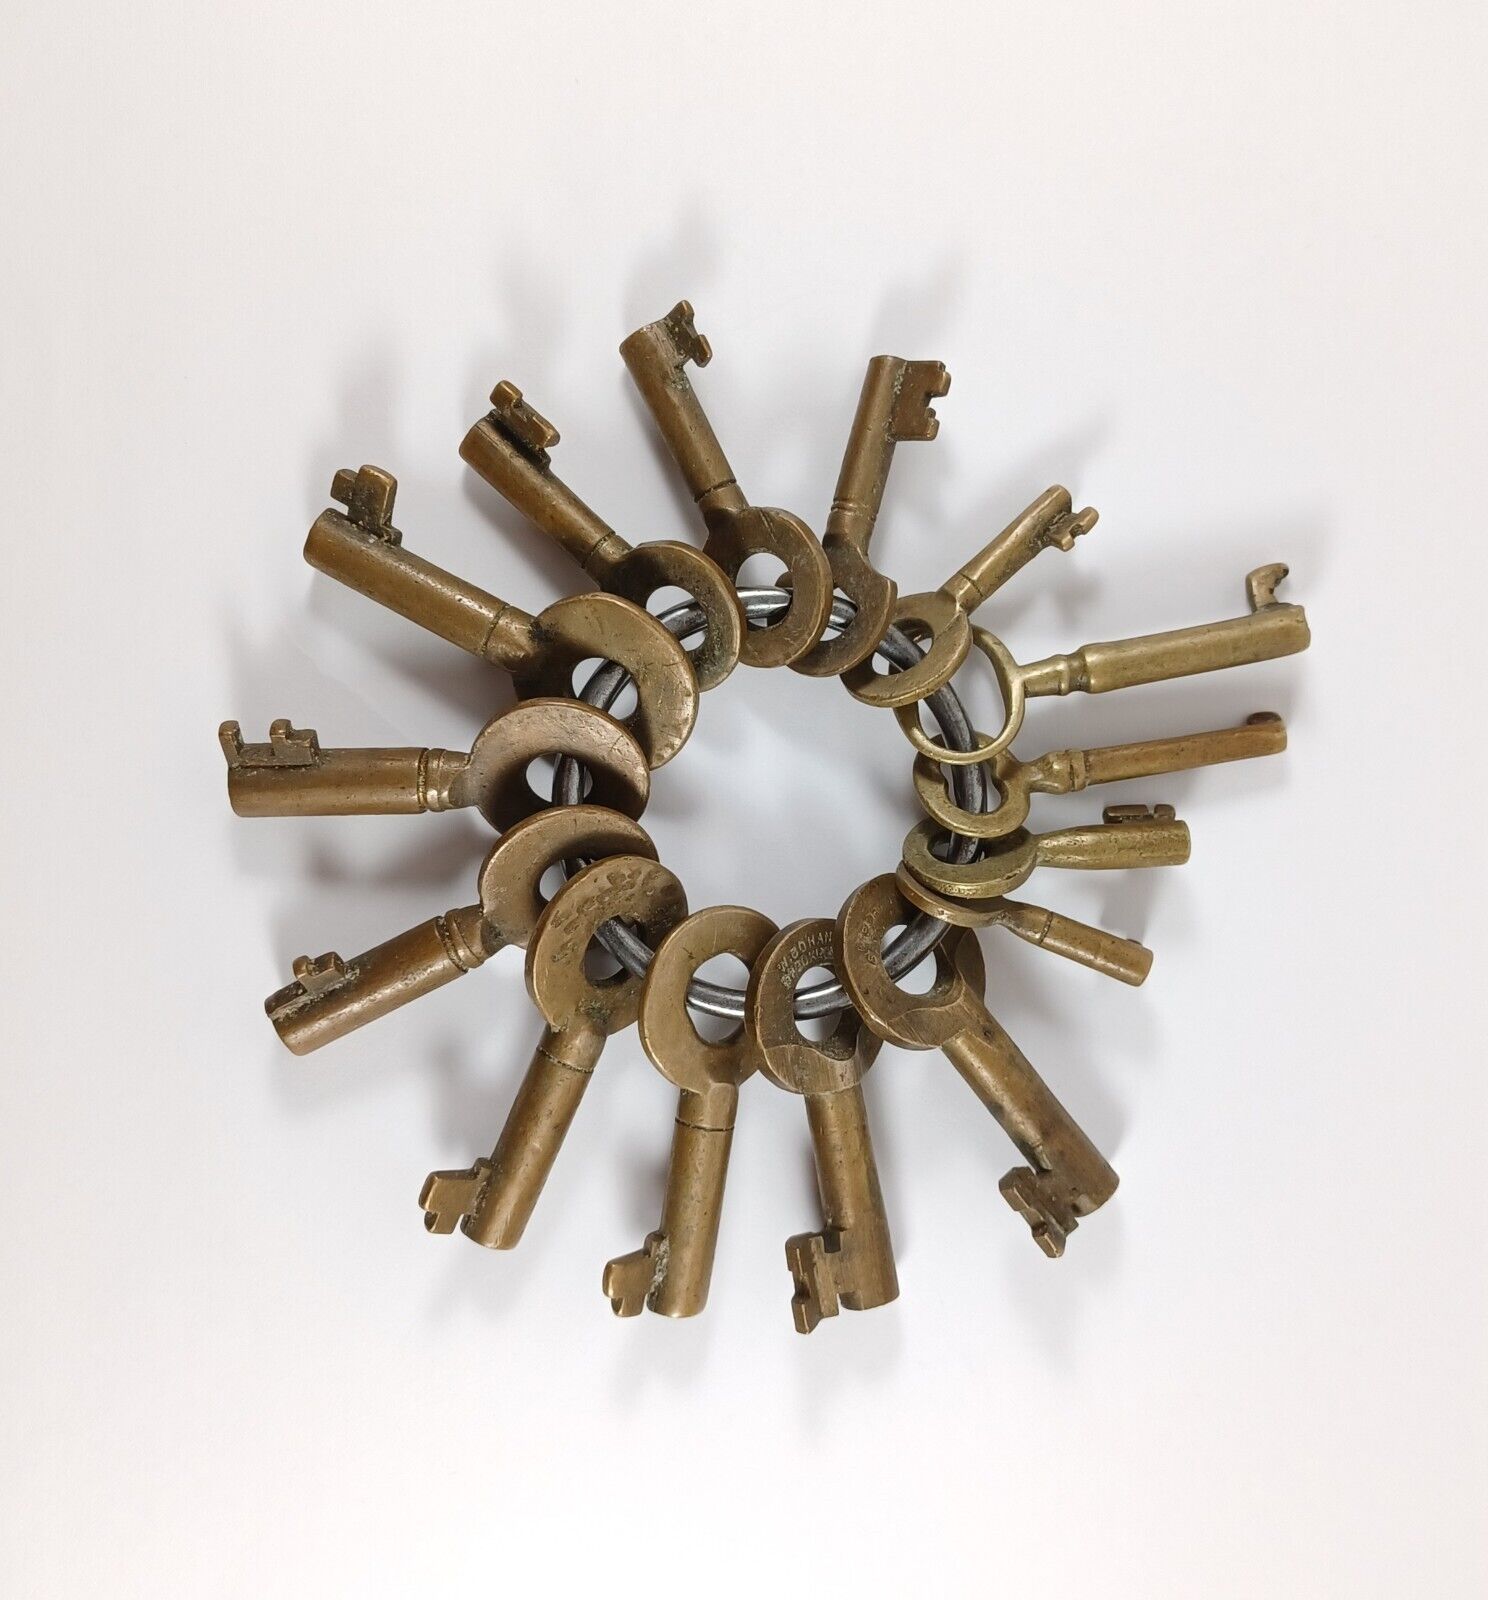 Lot Of 15 Antique Brass Hollow Barrel Keys, W. Bohannan, Marked Keys On Big Ring